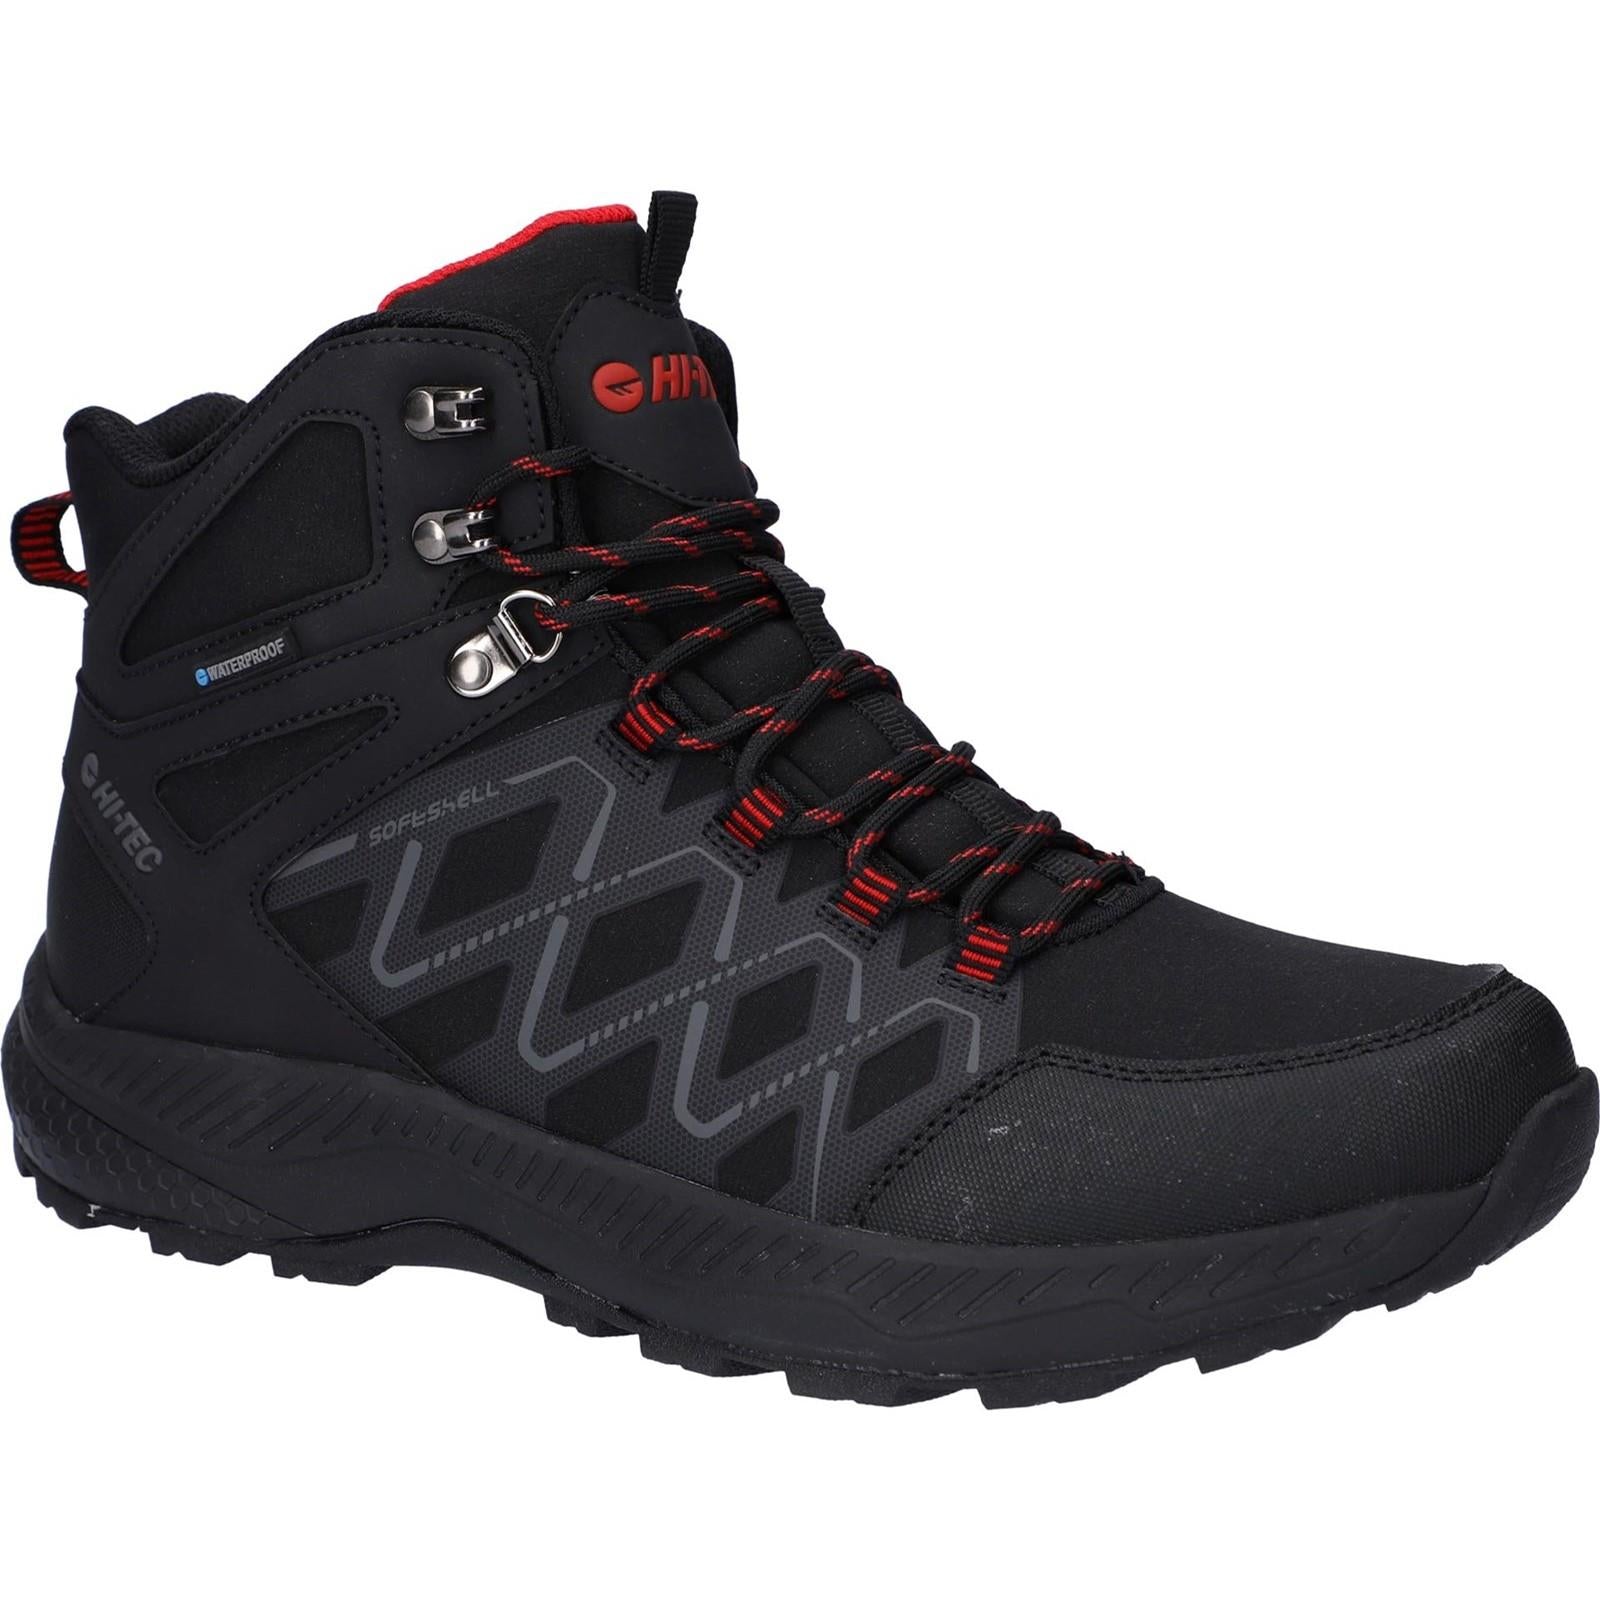 Hi-Tec Diamonde Mid men's waterproof lightweight breathable hiking/walking boot